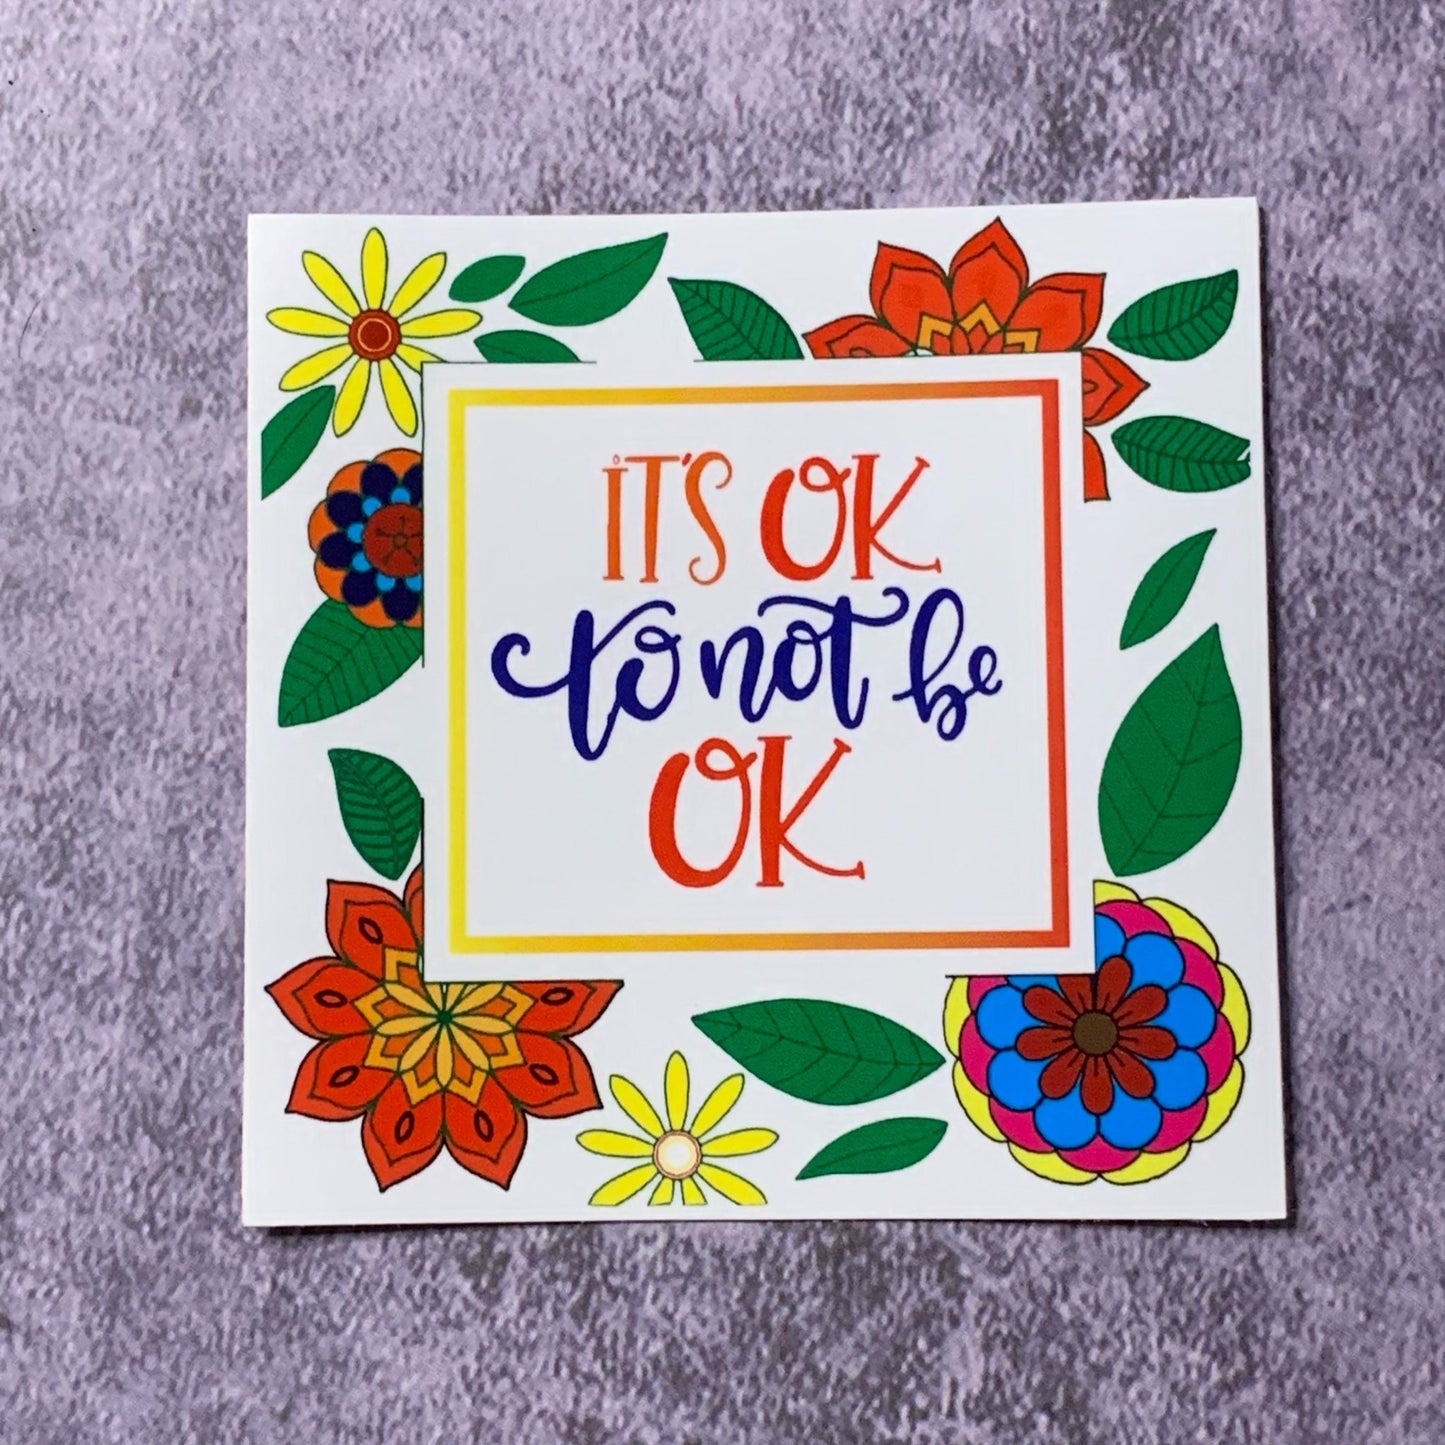 It’s OK To Not Be OK Vinyl Sticker, Vinyl Decal, Laptop Sticker, Recovery Sticker, Encouragement